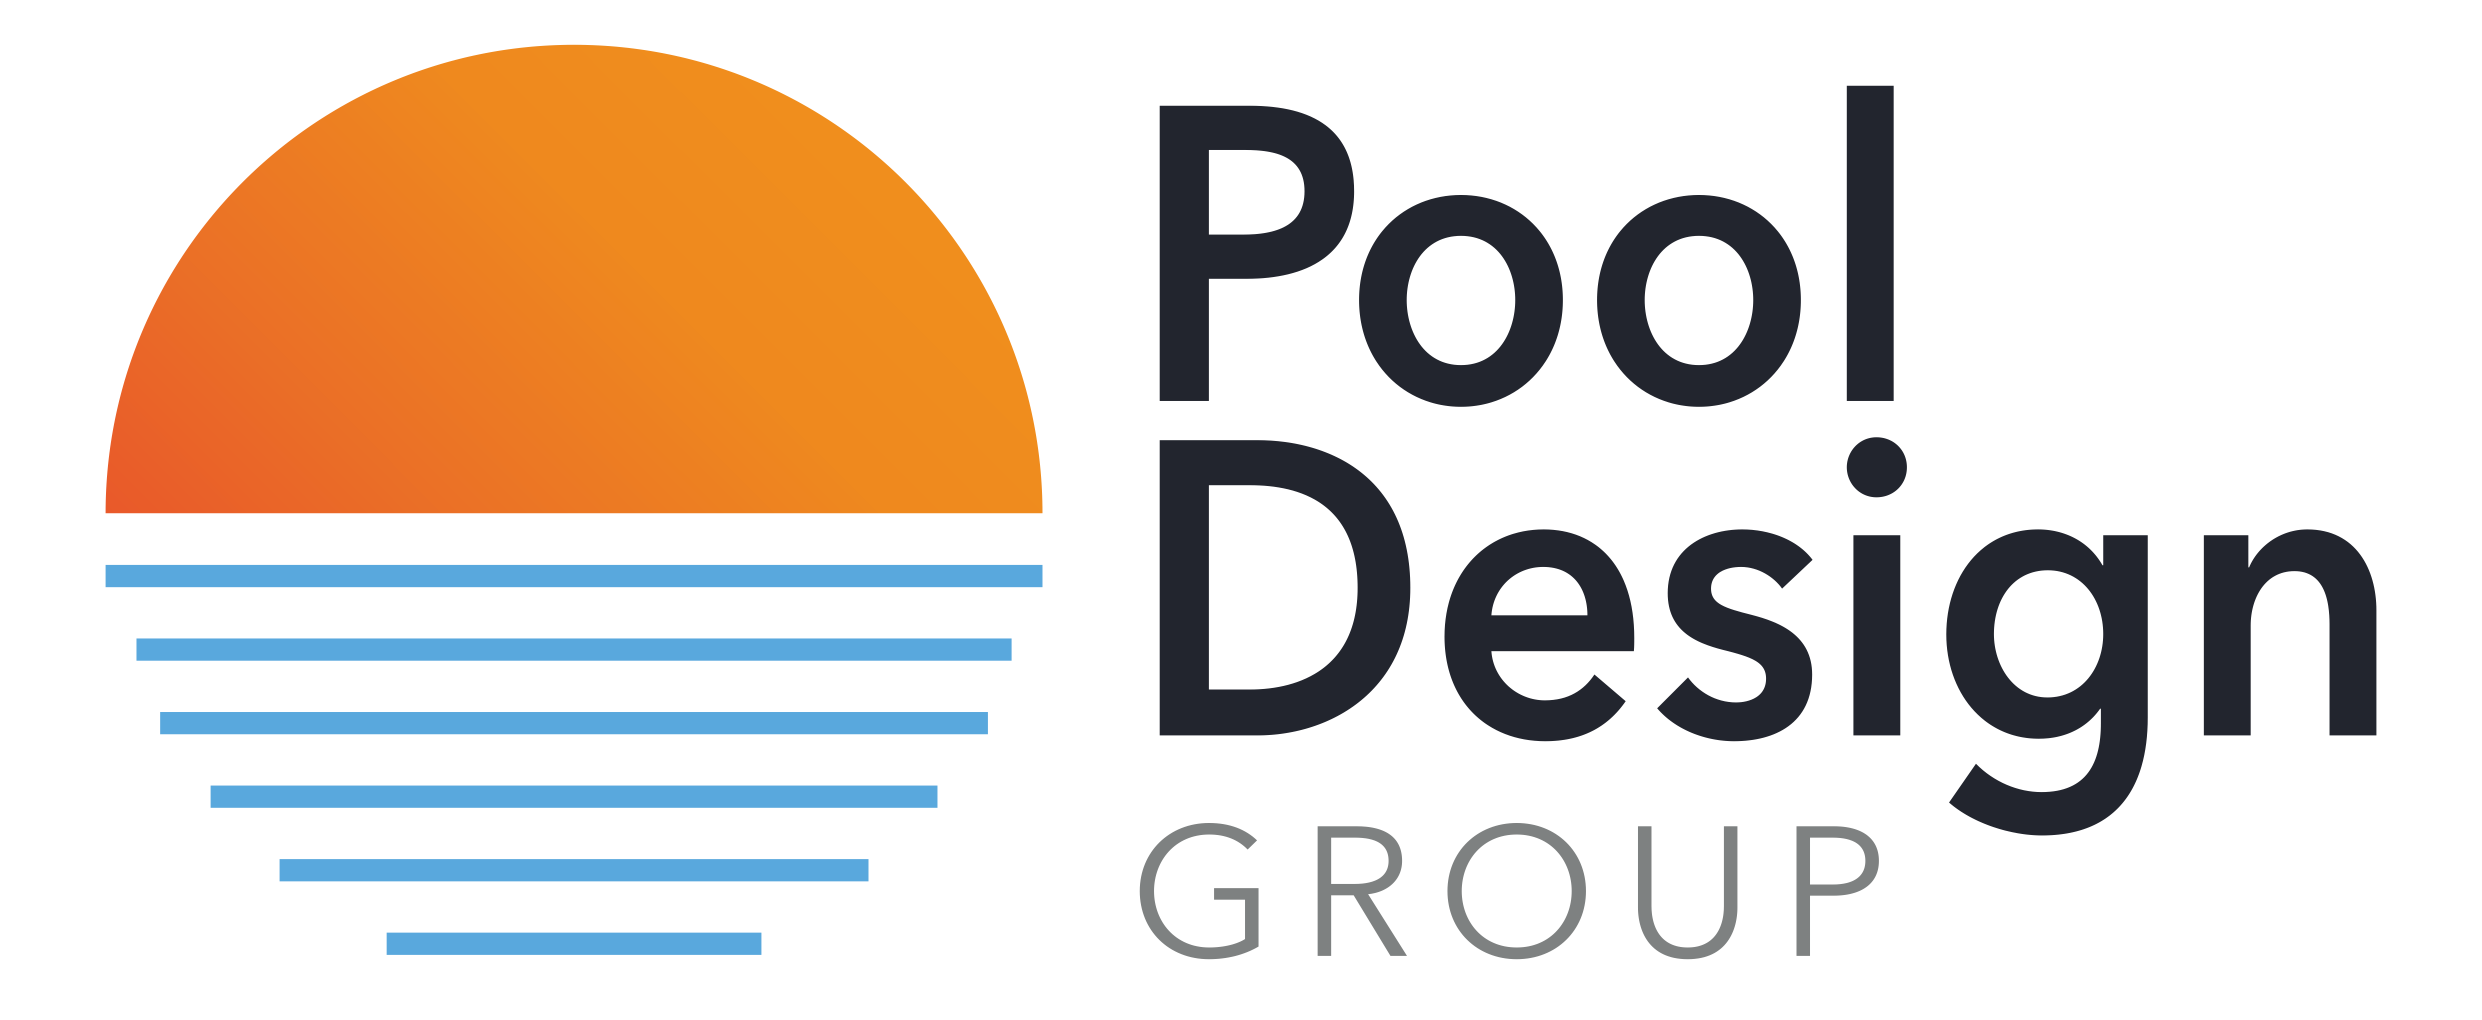 PoolDesignGroup: Vendita piscine fuori terra e interrate, Accessori per piscine